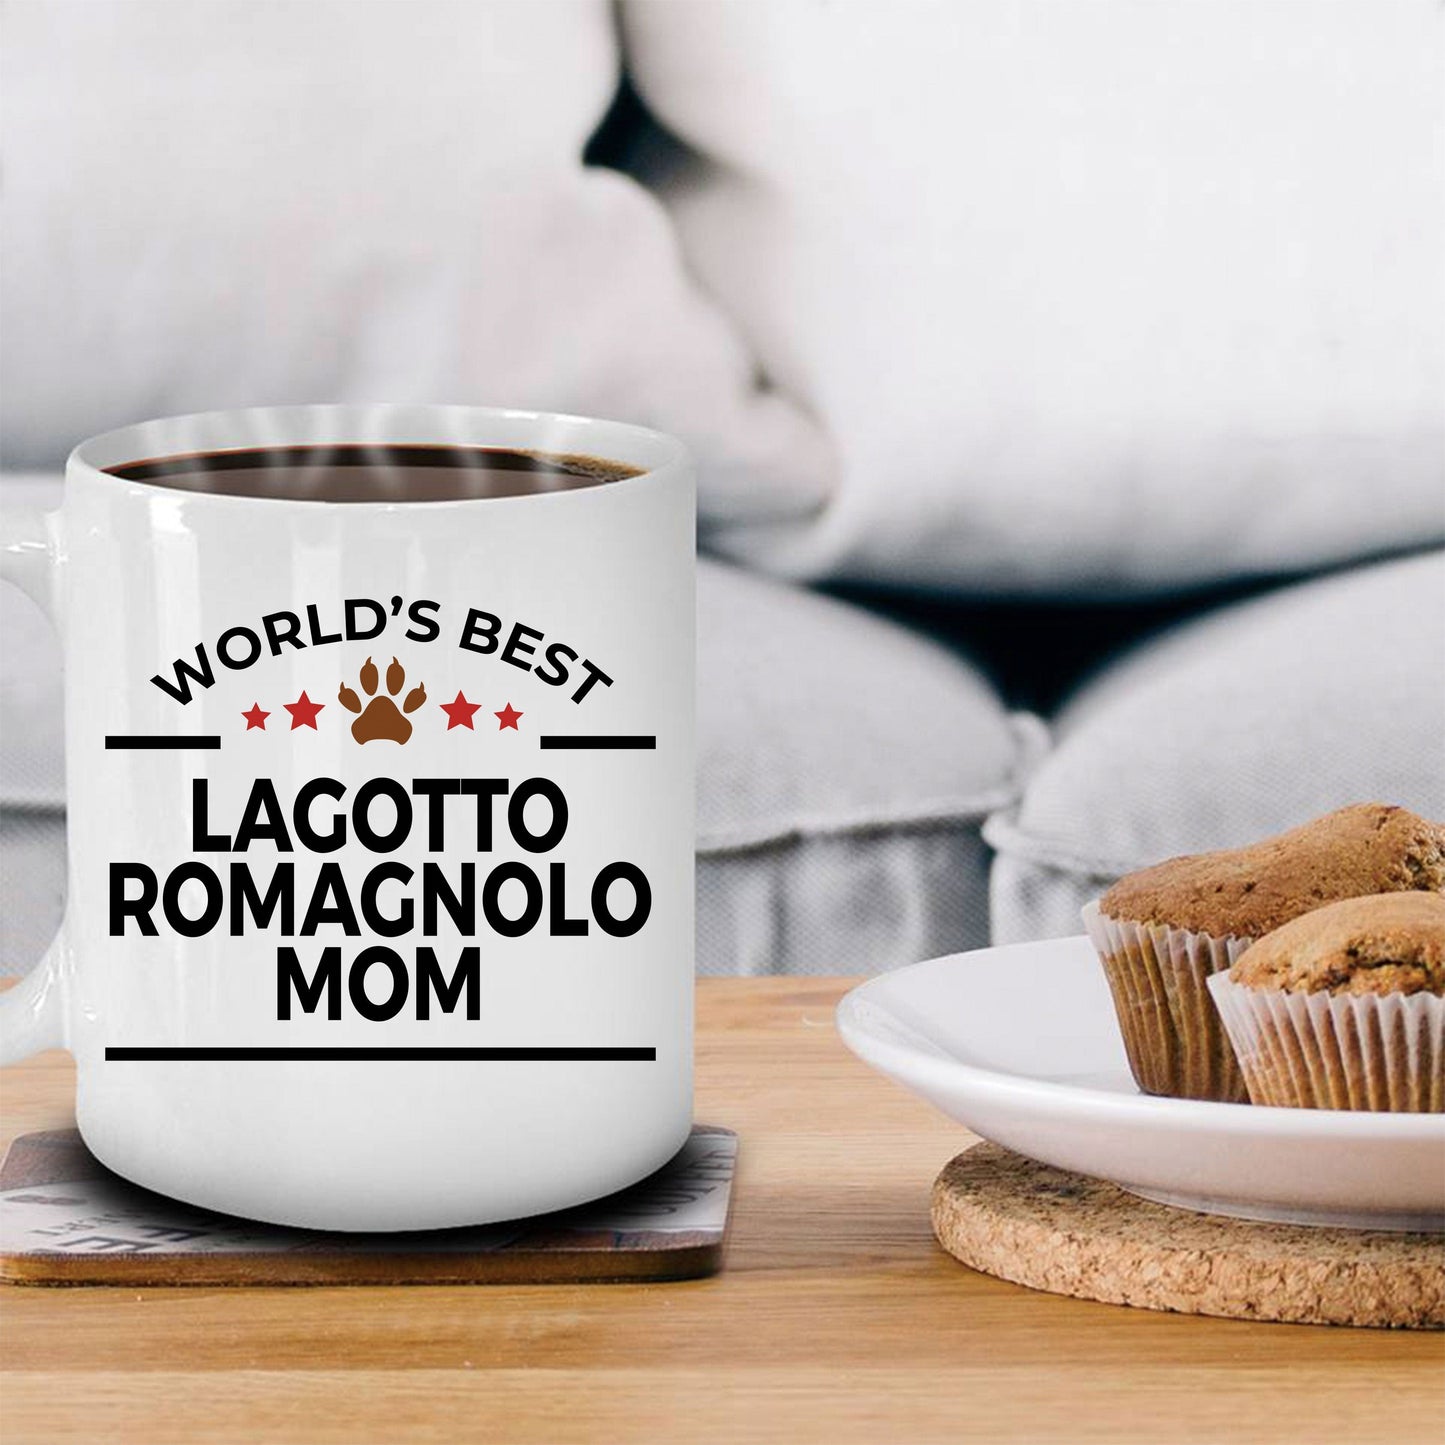 Lagotto Romagnolo Dog Lover Gift World's Best Mom Birthday Mother's Day White Ceramic Coffee Mug